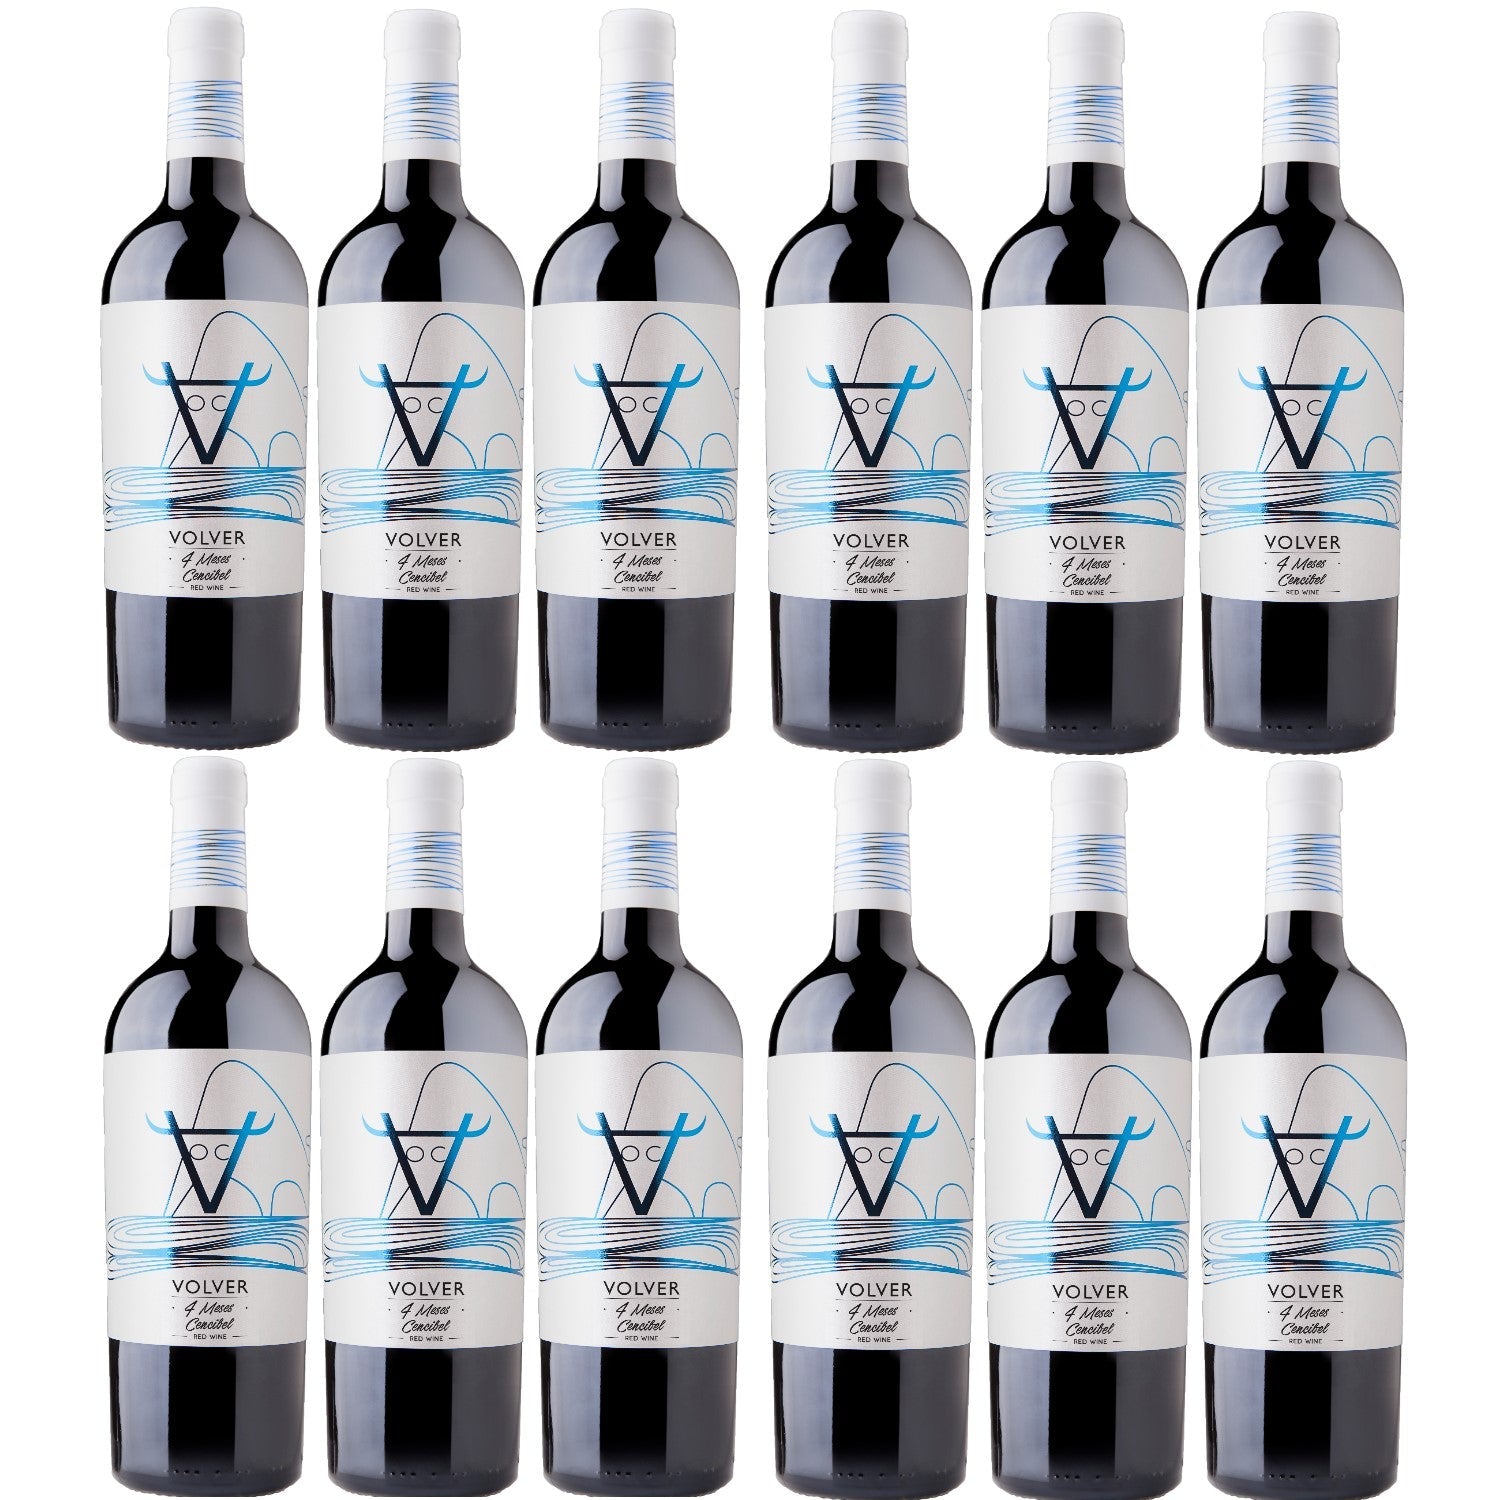 Bodegas Volver 4 Meses Cencibel Vdt Castilla Rotwein Wein trocken Spanien (12 x 0.75l) - Versanel -